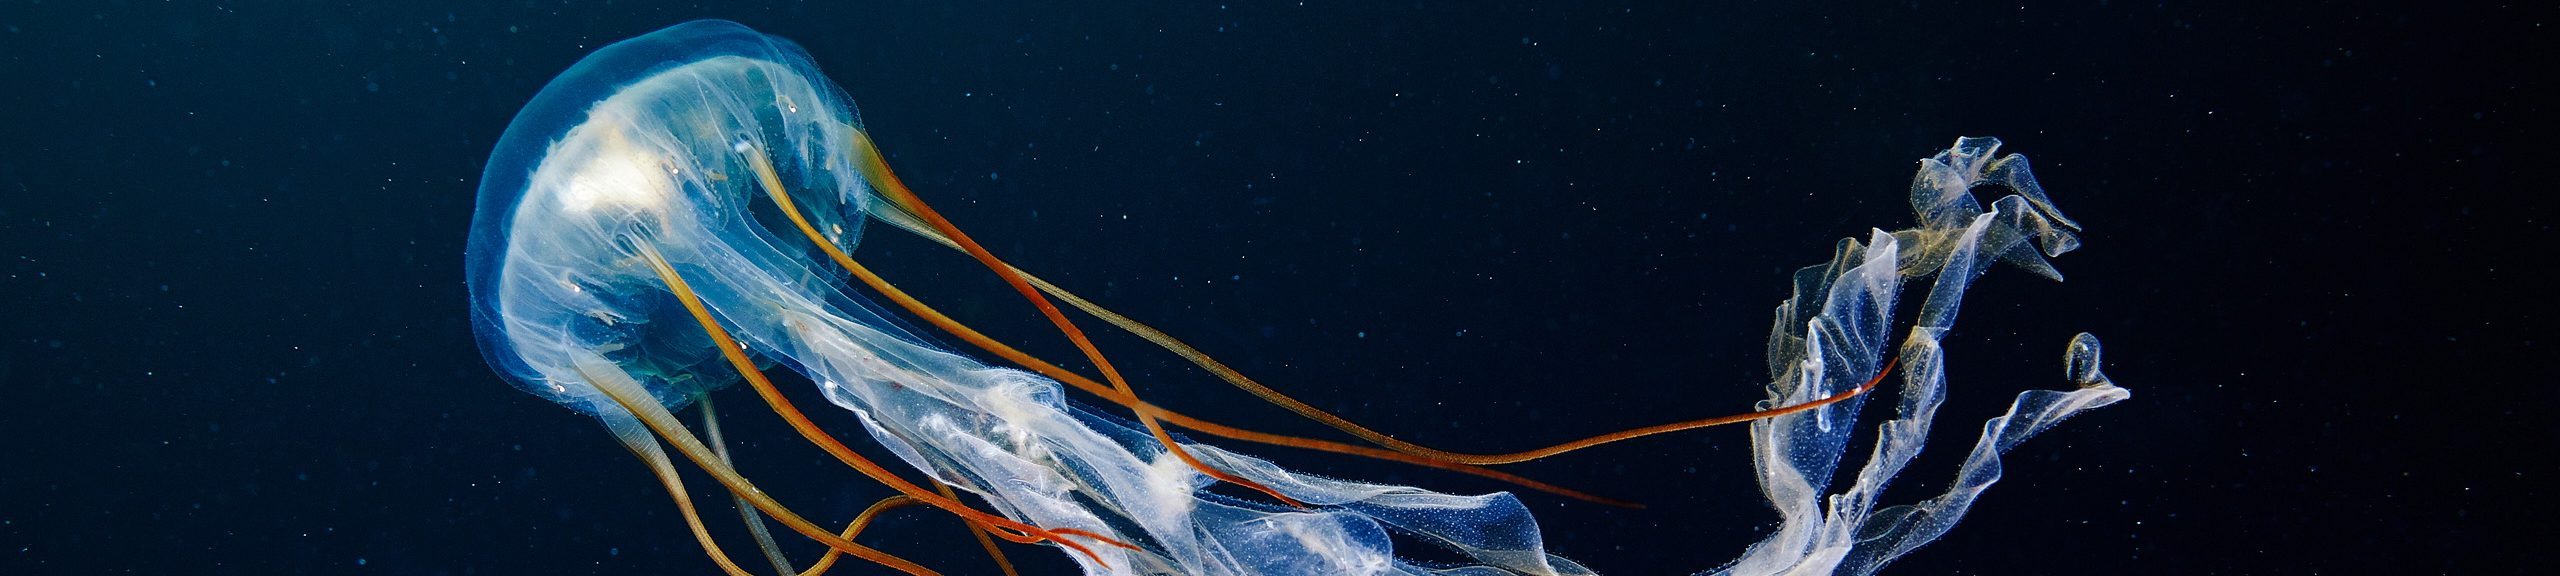 Scyphozoan-jellyfish-Chrysaora-spp-2